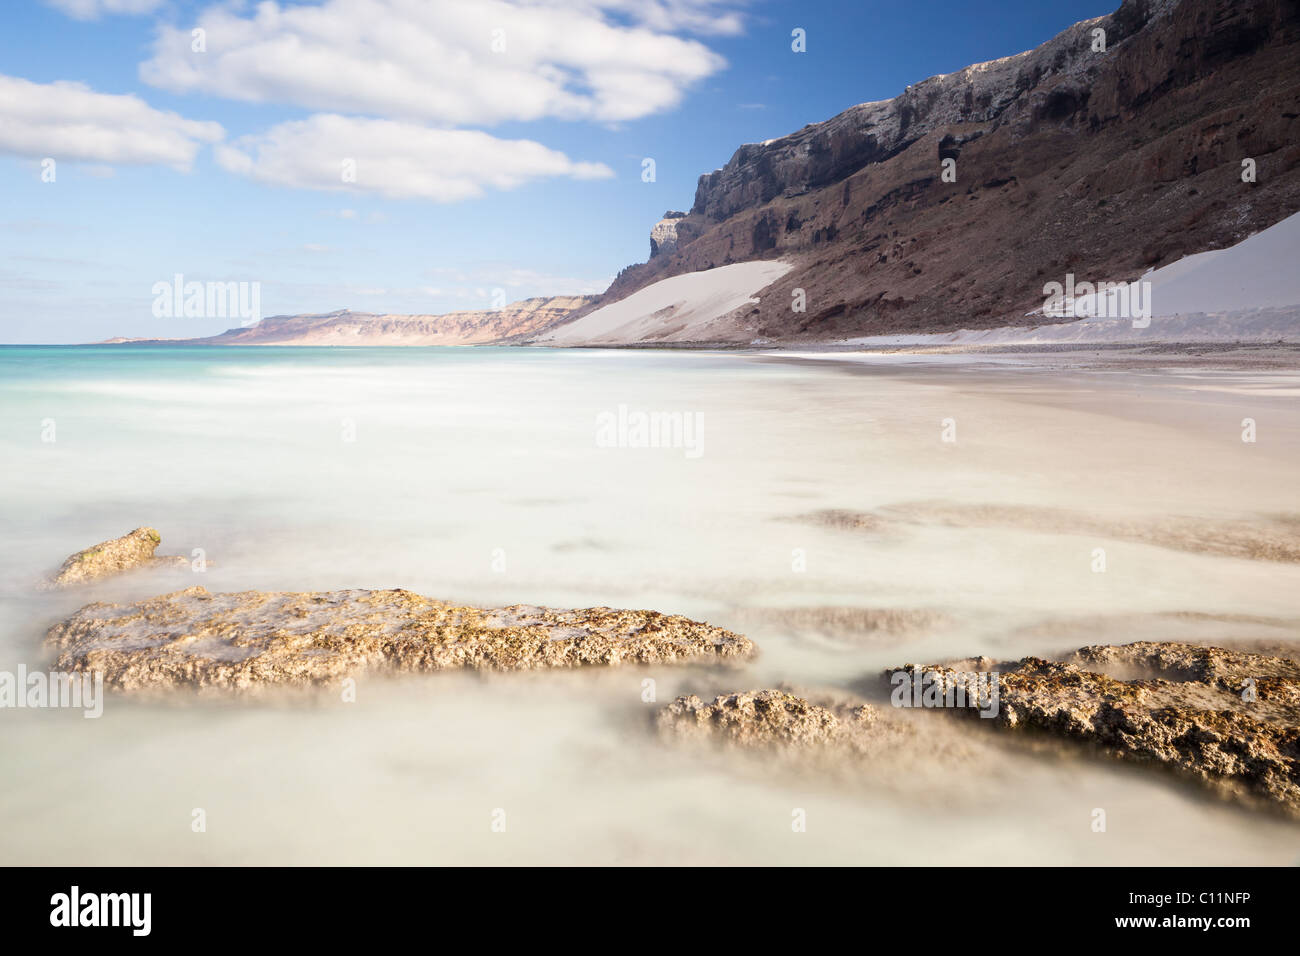 The coast near Arrar, Socotra Stock Photo